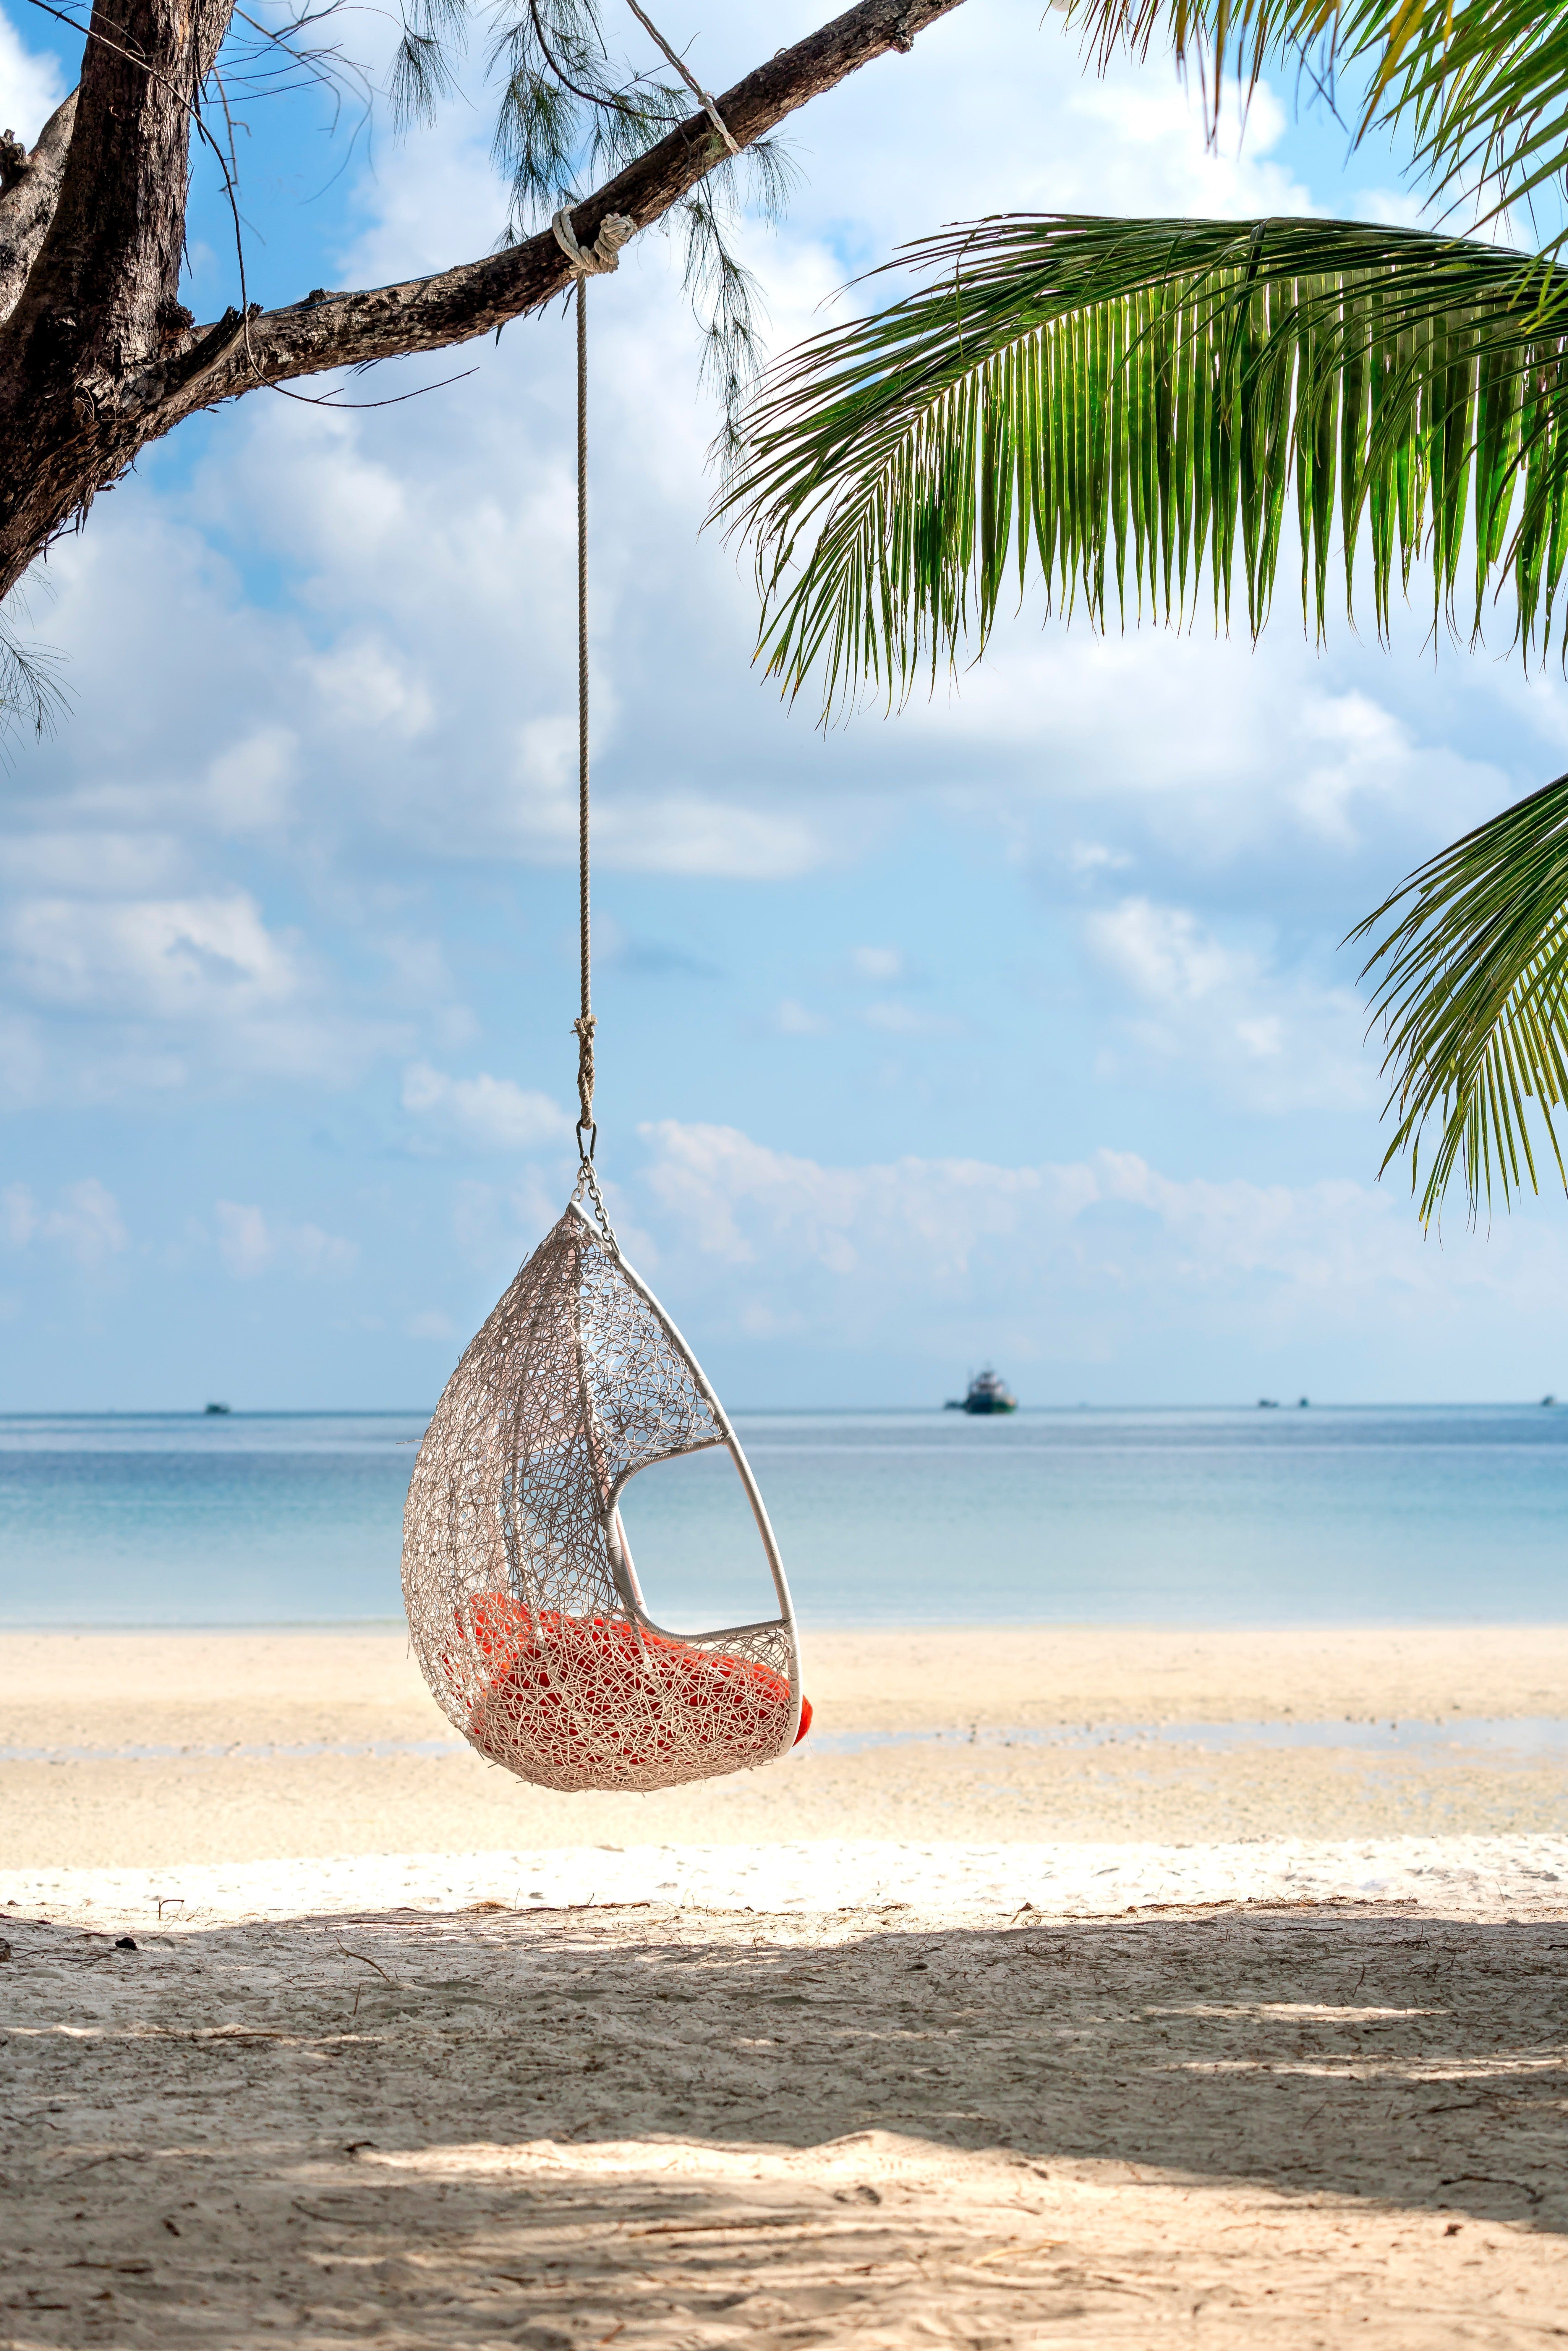 Beach hammock chair resort tropical island